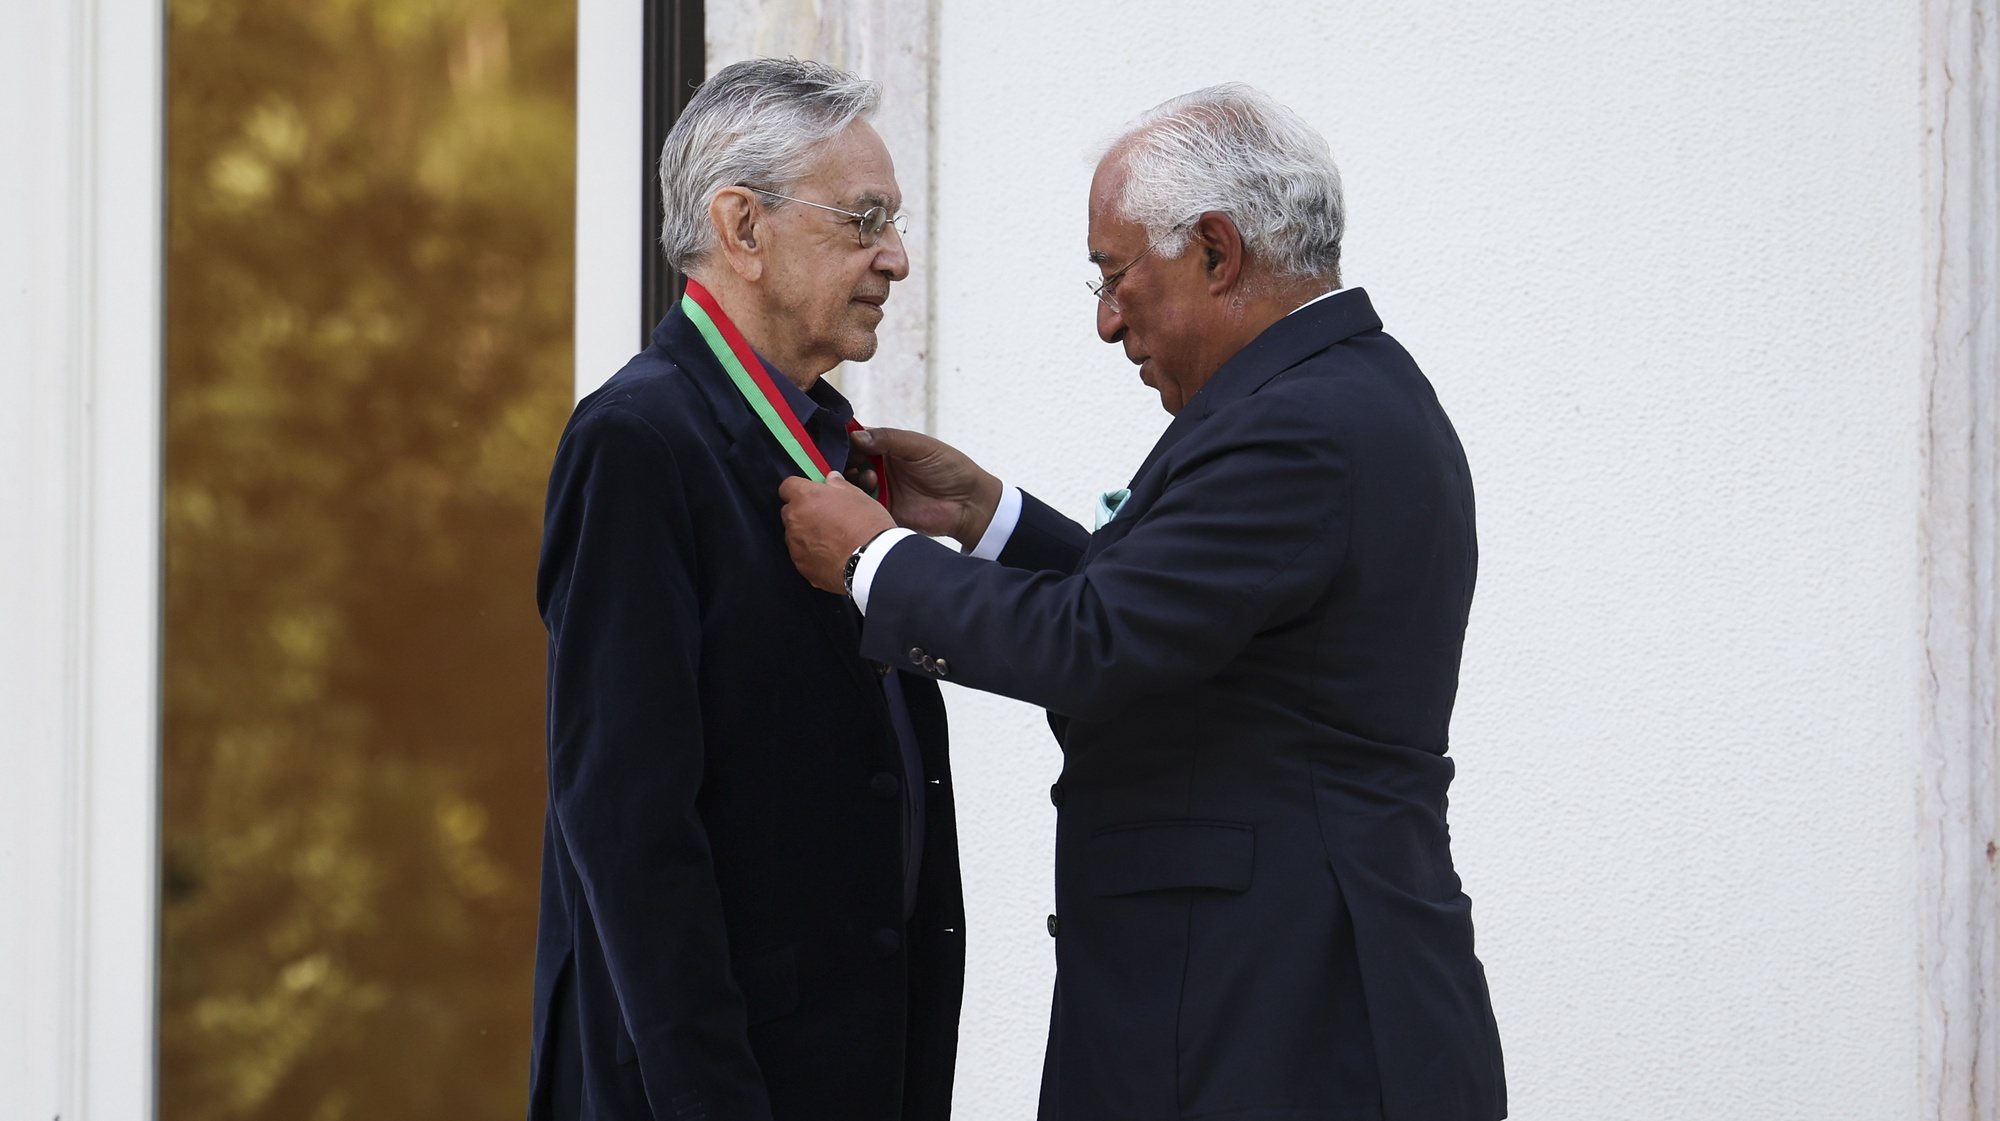 O primeiro Ministro, António Costa (D), entrega a medalha de mérito cultural ao cantor brasileiro Caetano Veloso, numa cerimónia no Residência Oficial do primeiro Ministro, em Lisboa, 12 de setembro de 2023. JOSE SENA GOULAO/LUSA